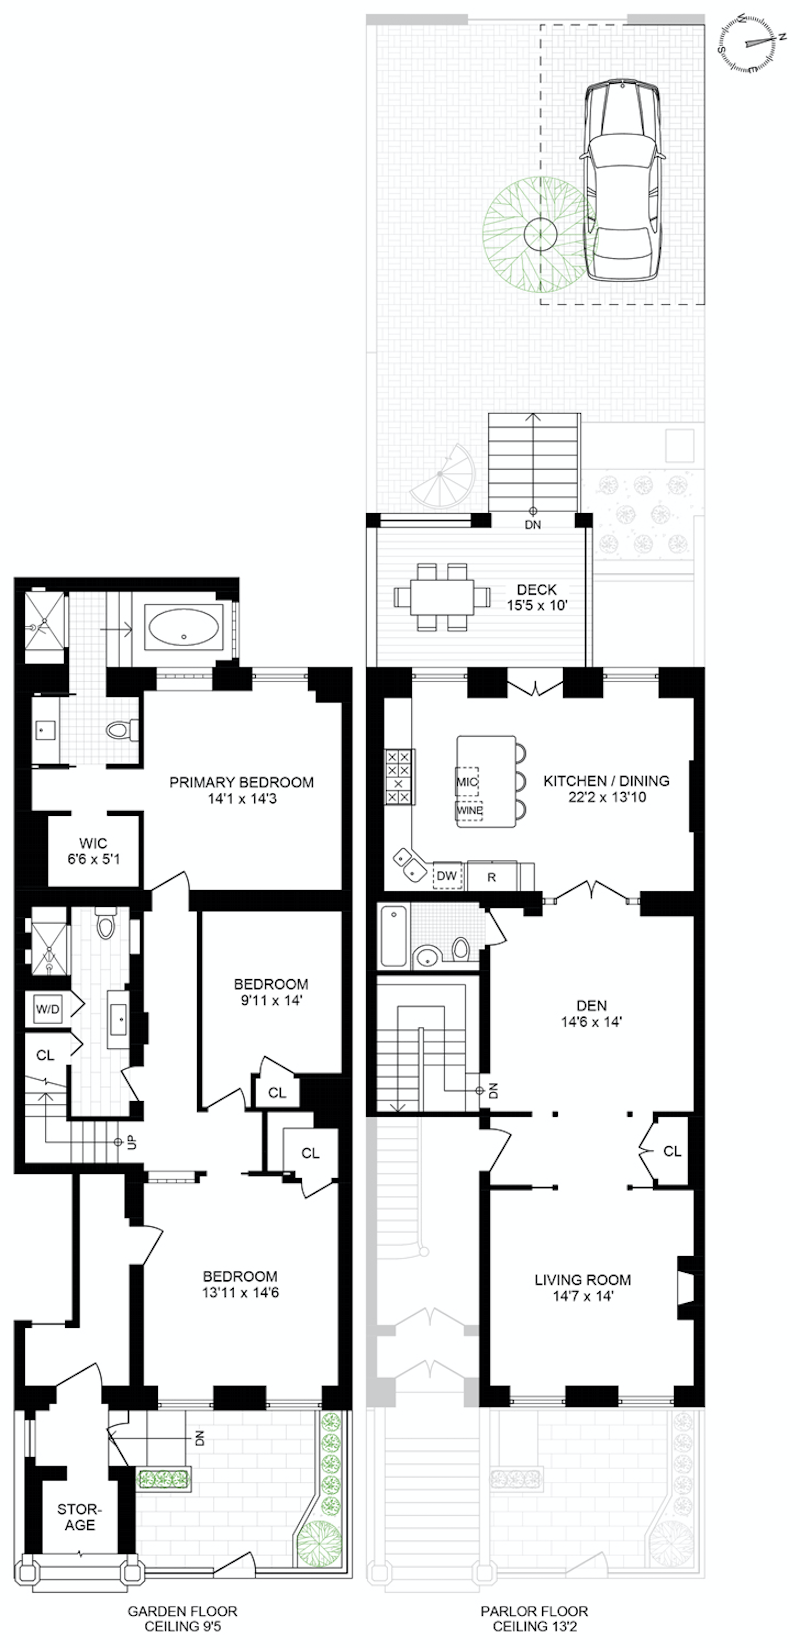 Floorplan for 218 Hudson St, A